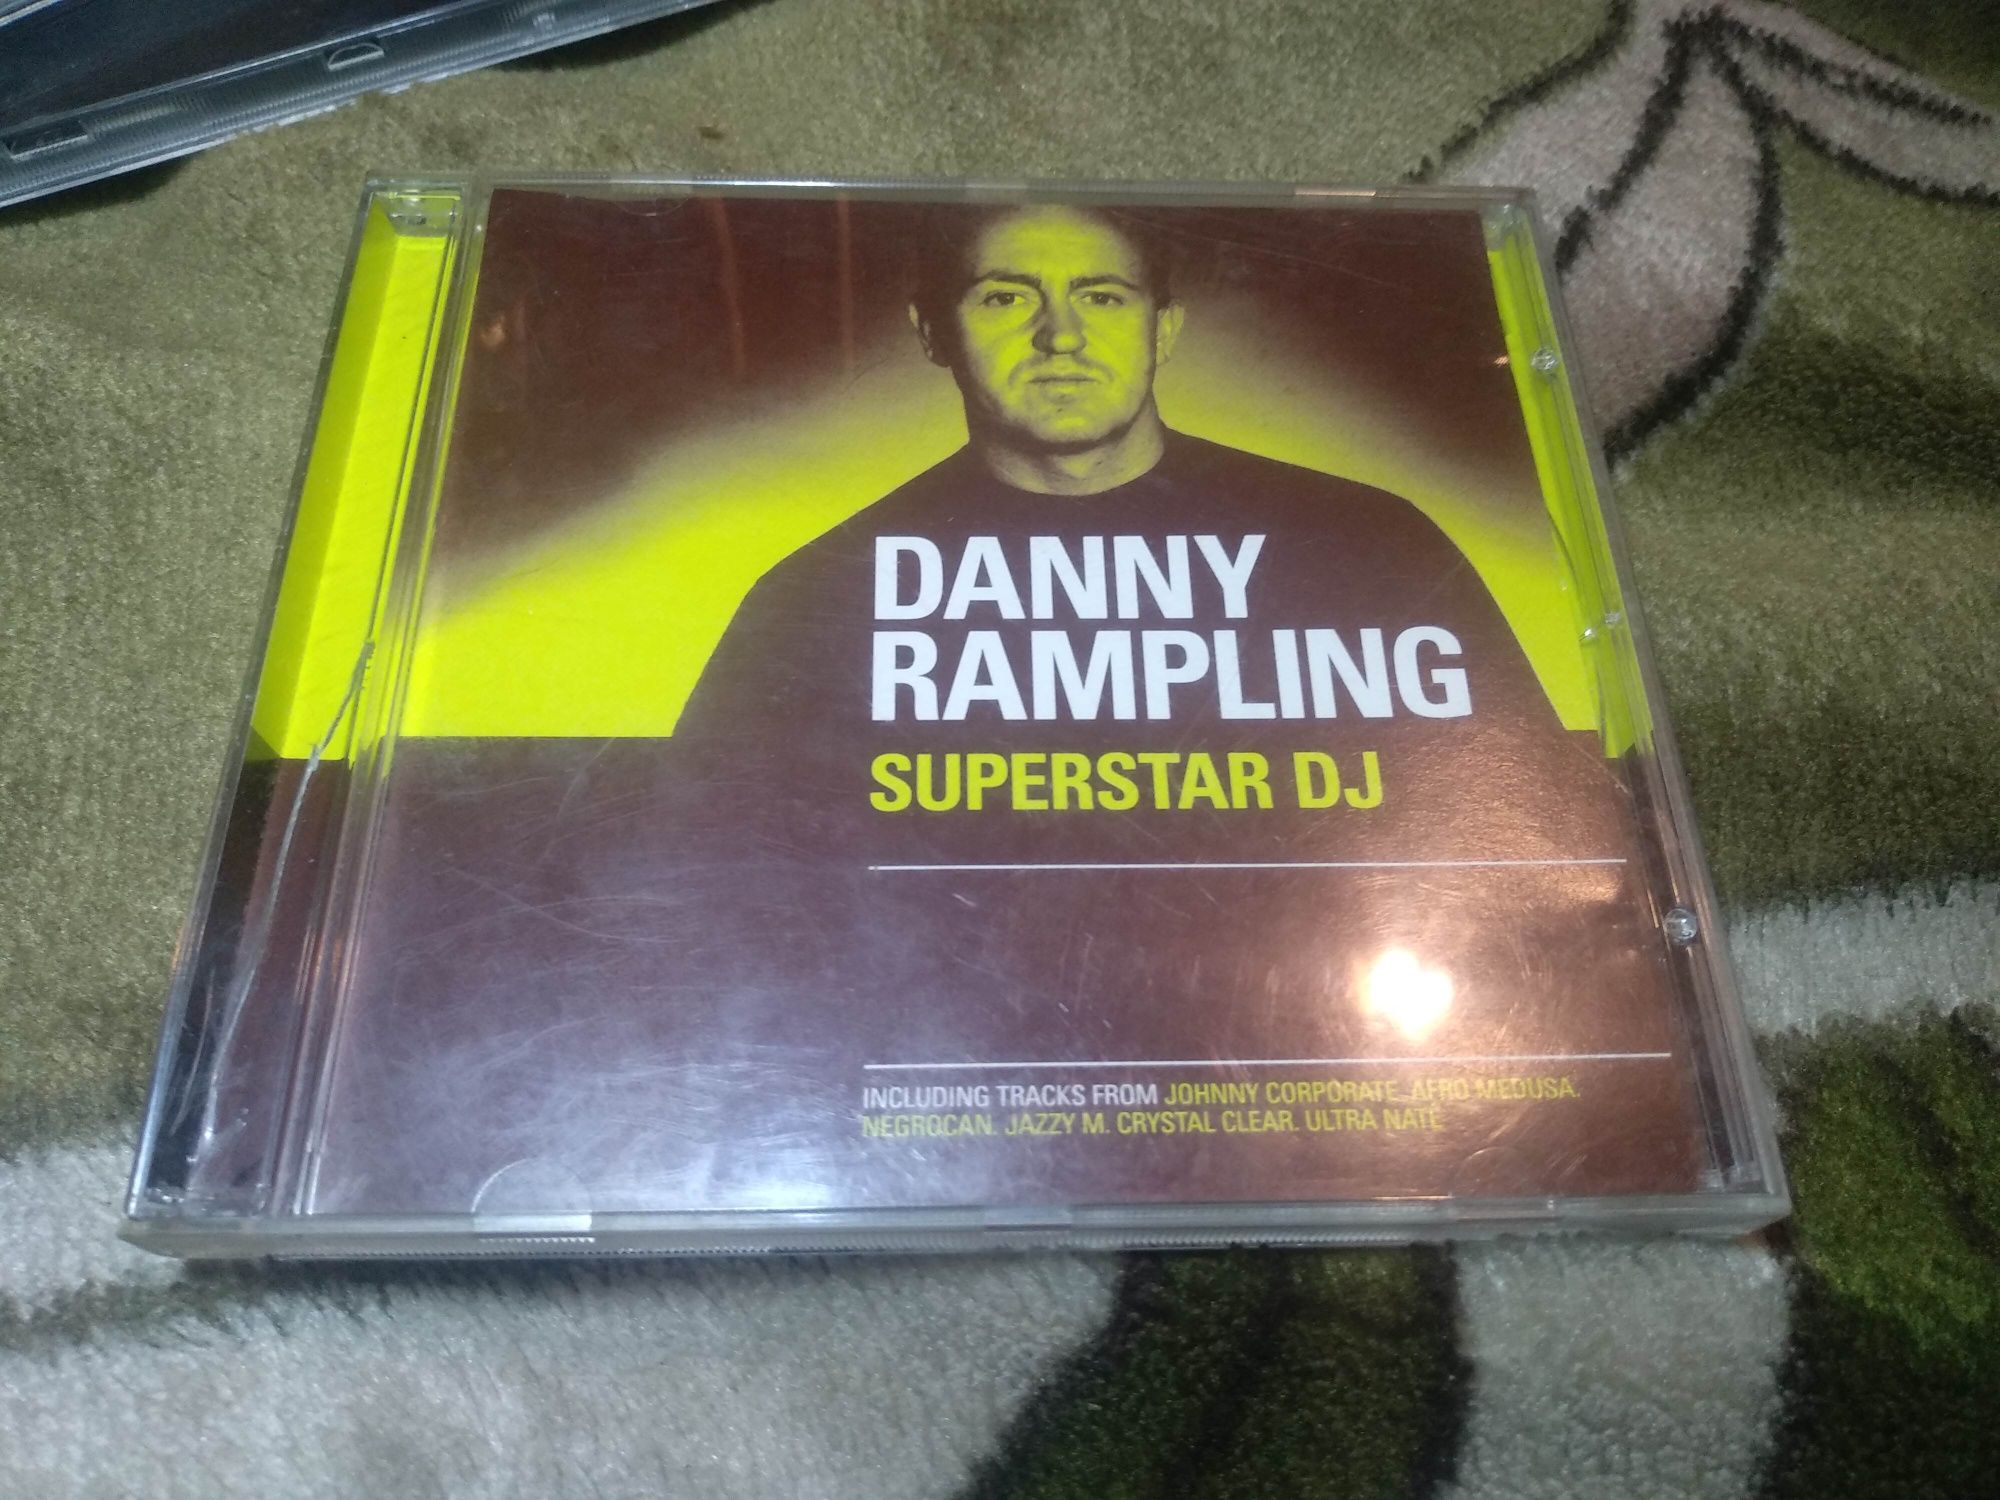 Danny Rampling Super Star DJ